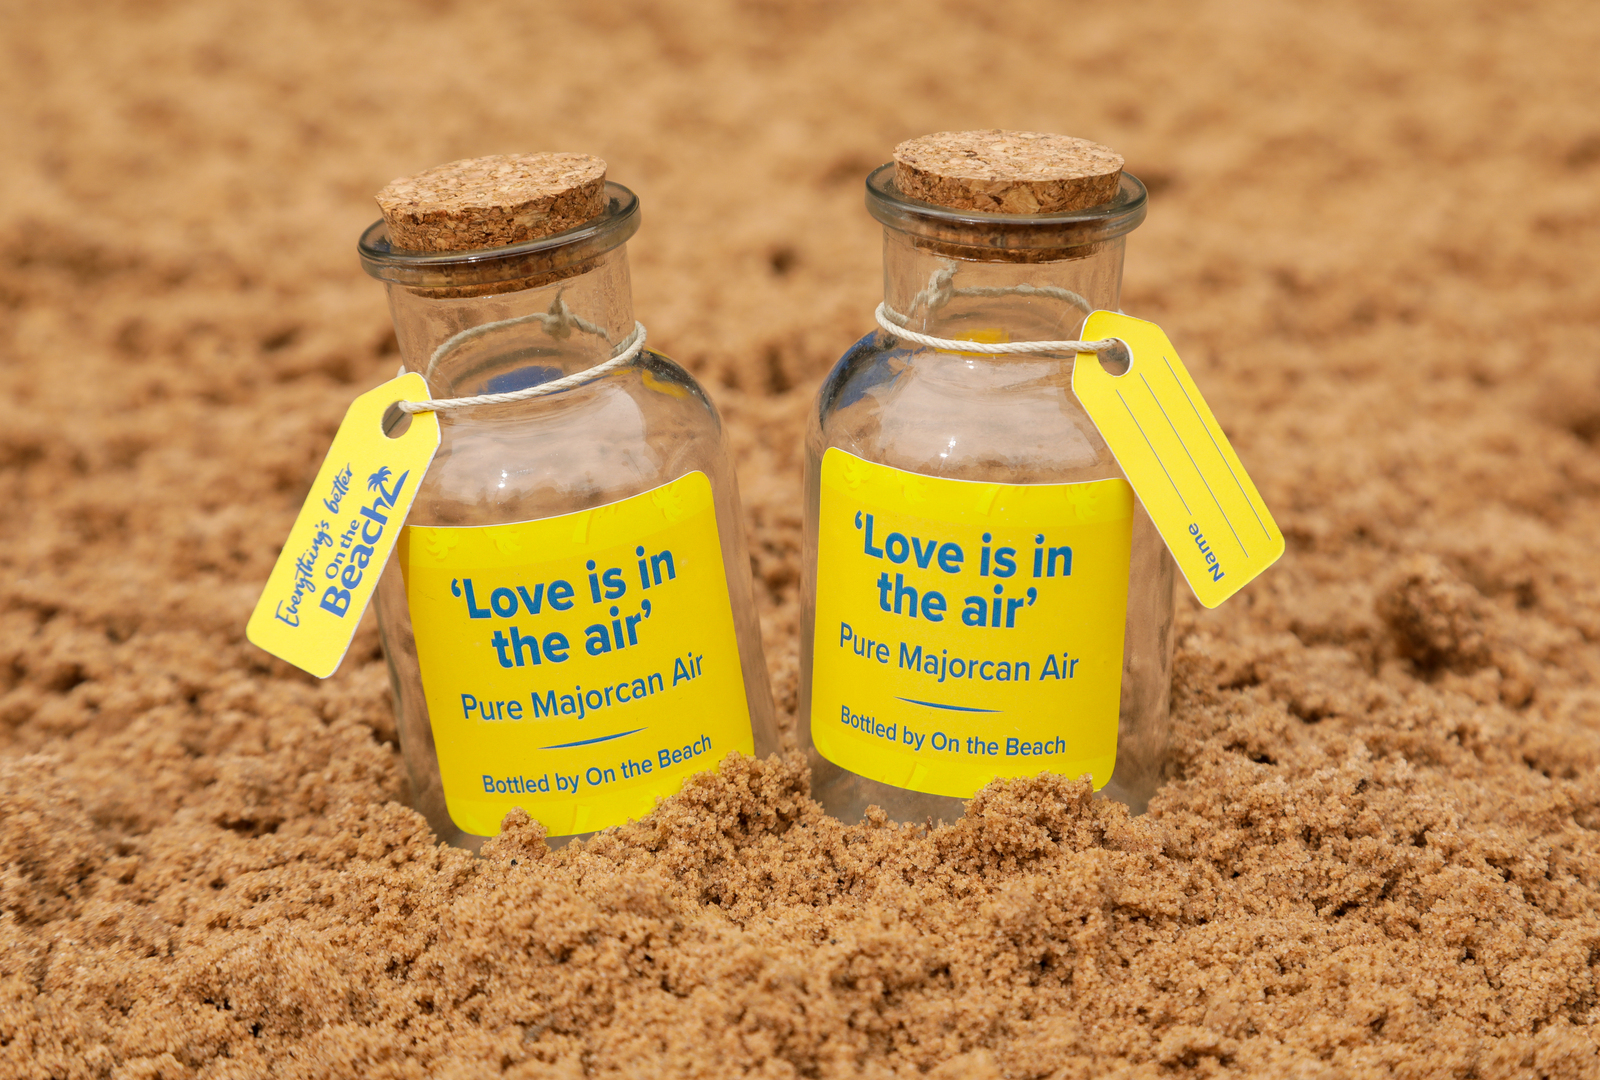 On the Beach &#8216;bottles Majorcan air&#8217; to recreate Love Island magic at home, The Manc